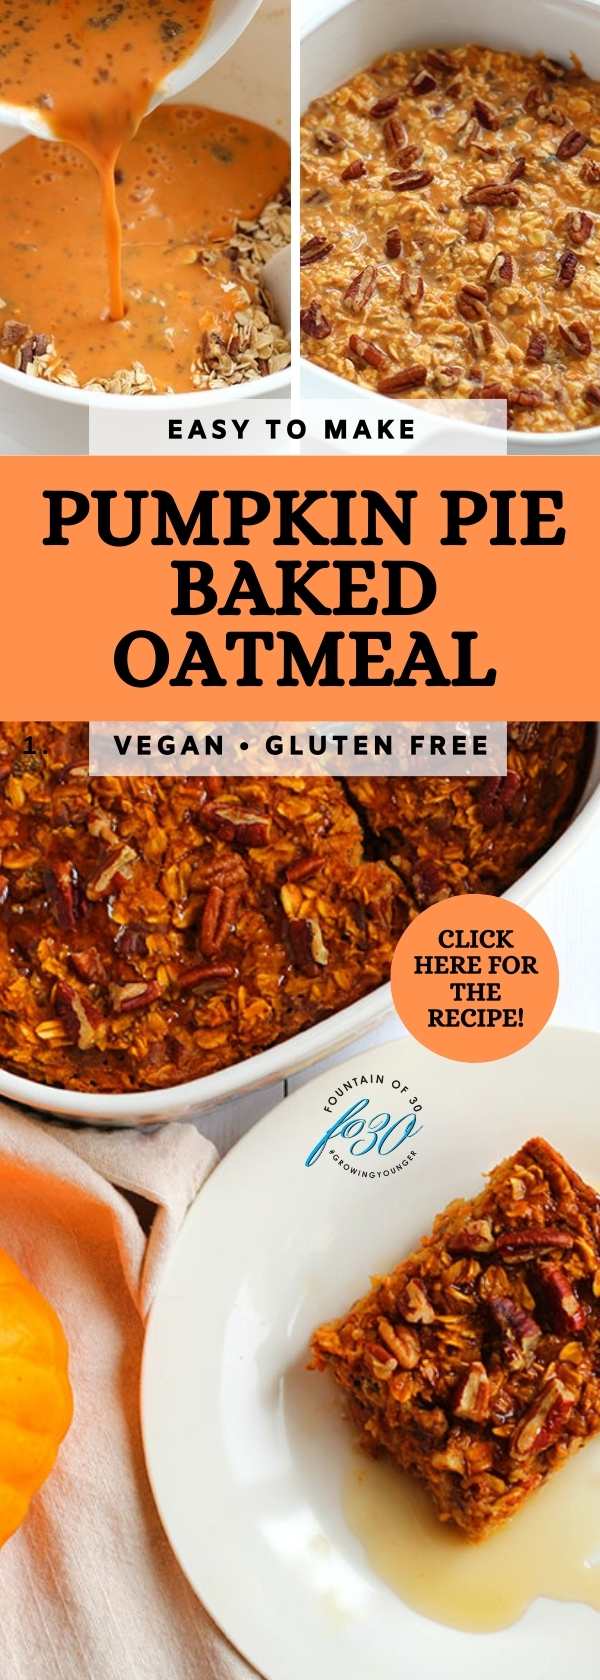 easy to make pumpkin spice oatmeal bake foutainof30